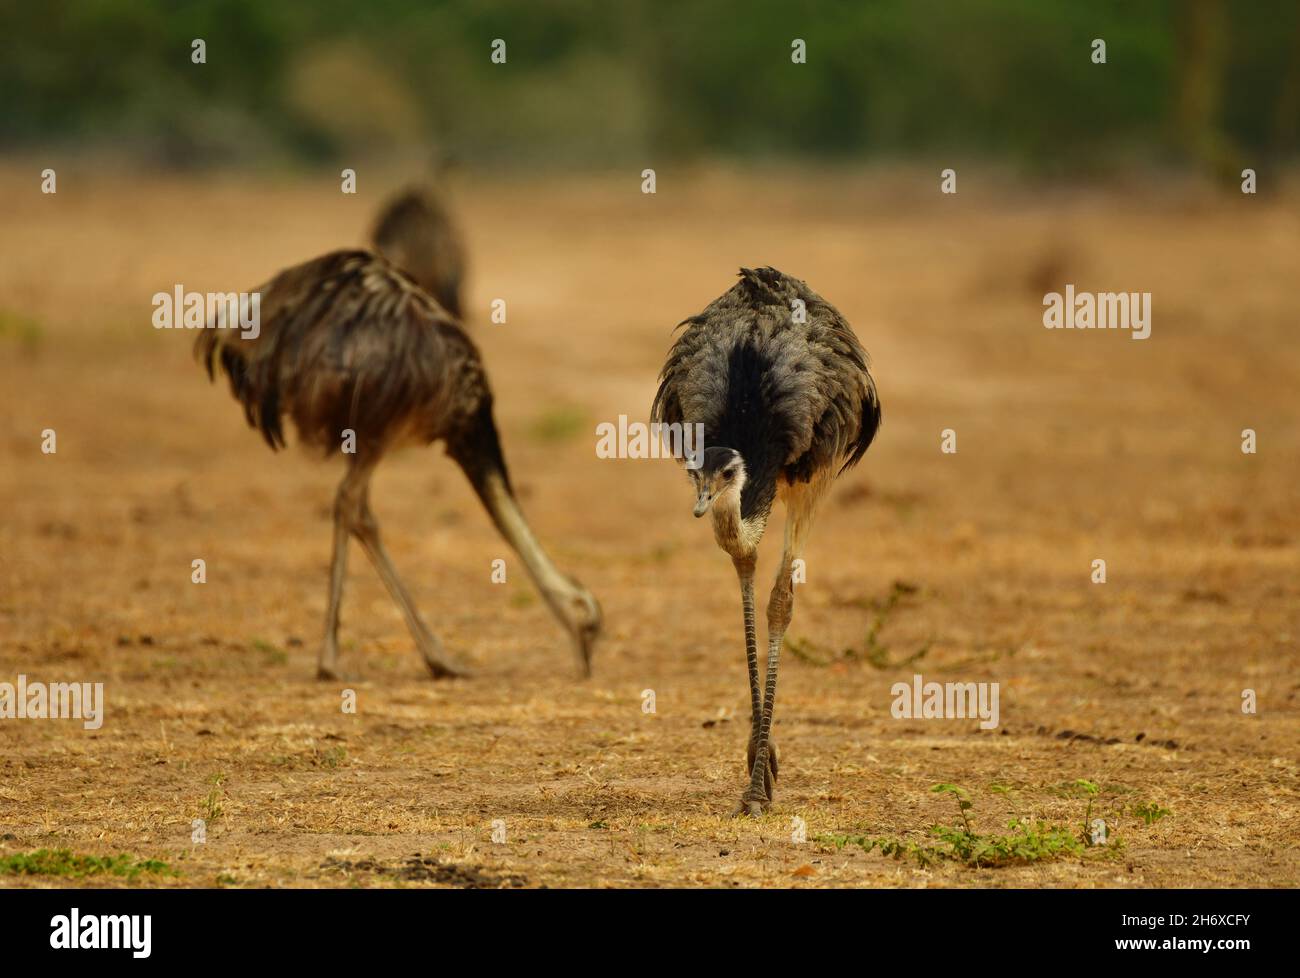 Group of Greater Rhea (Rhea americana) feeding in the savanna, Pantanal, Mato Grosso Stock Photo